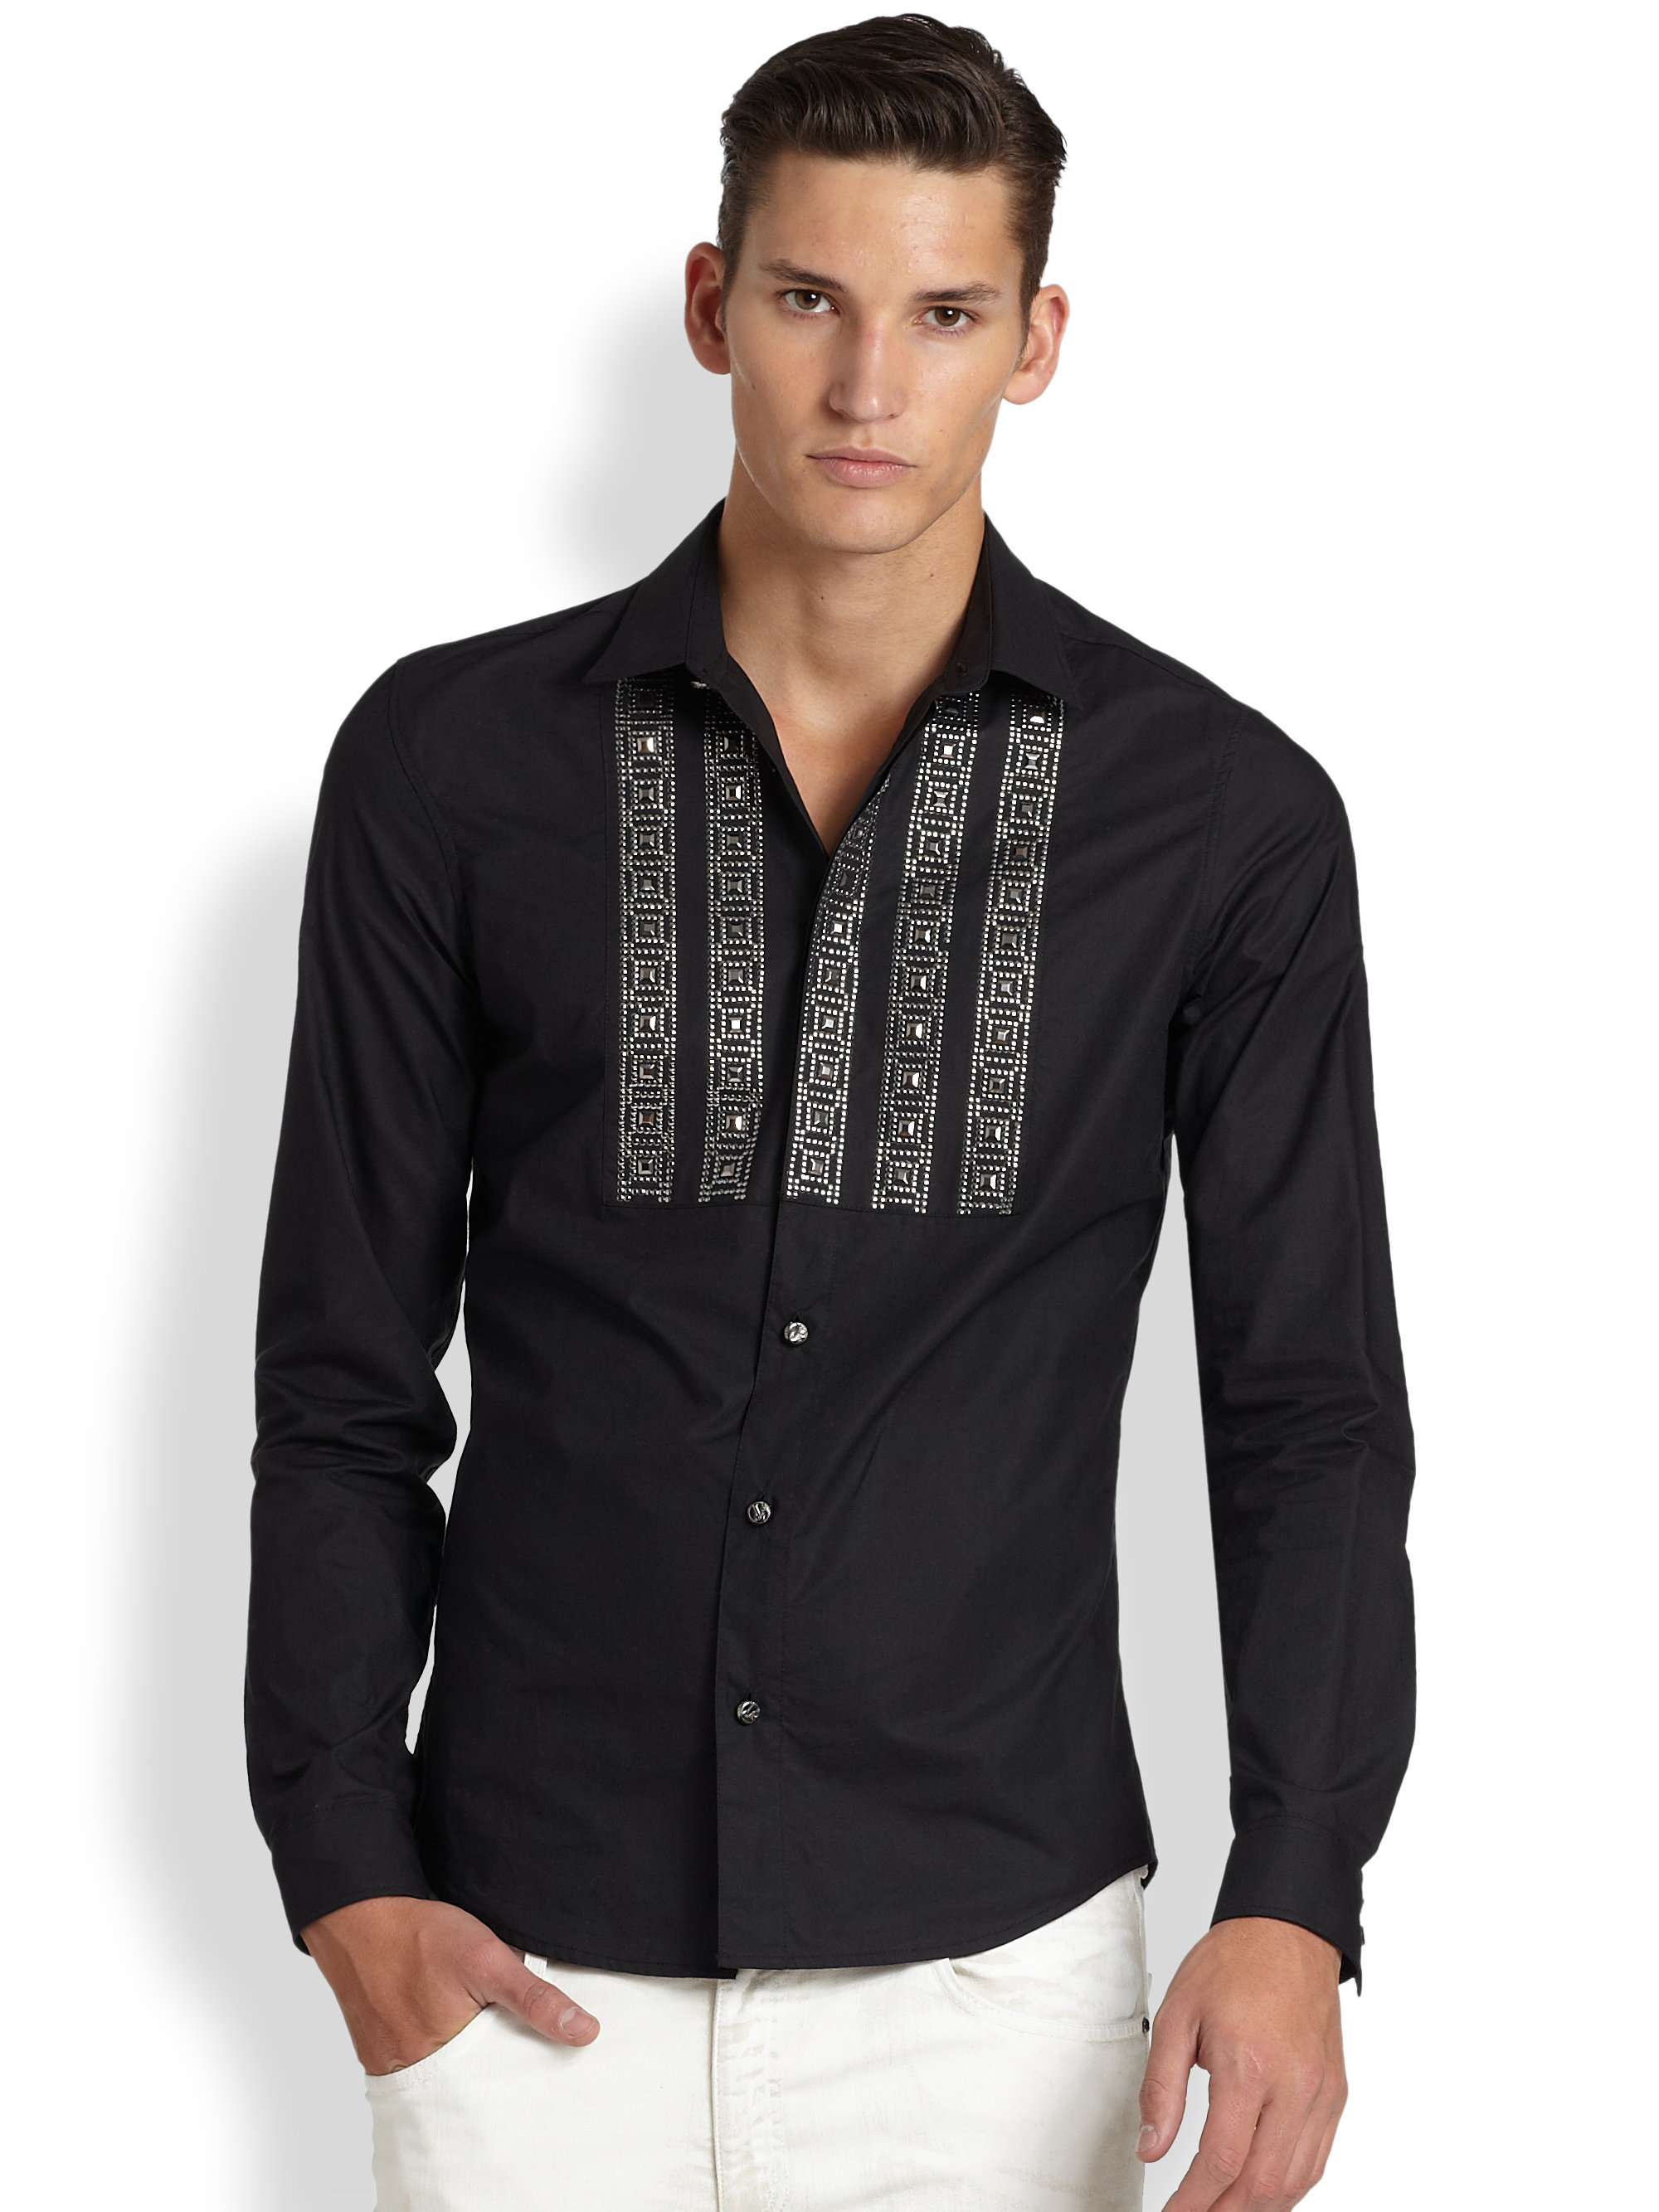 Lyst - Versace jeans Studded Greek Key Sportshirt in Black for Men